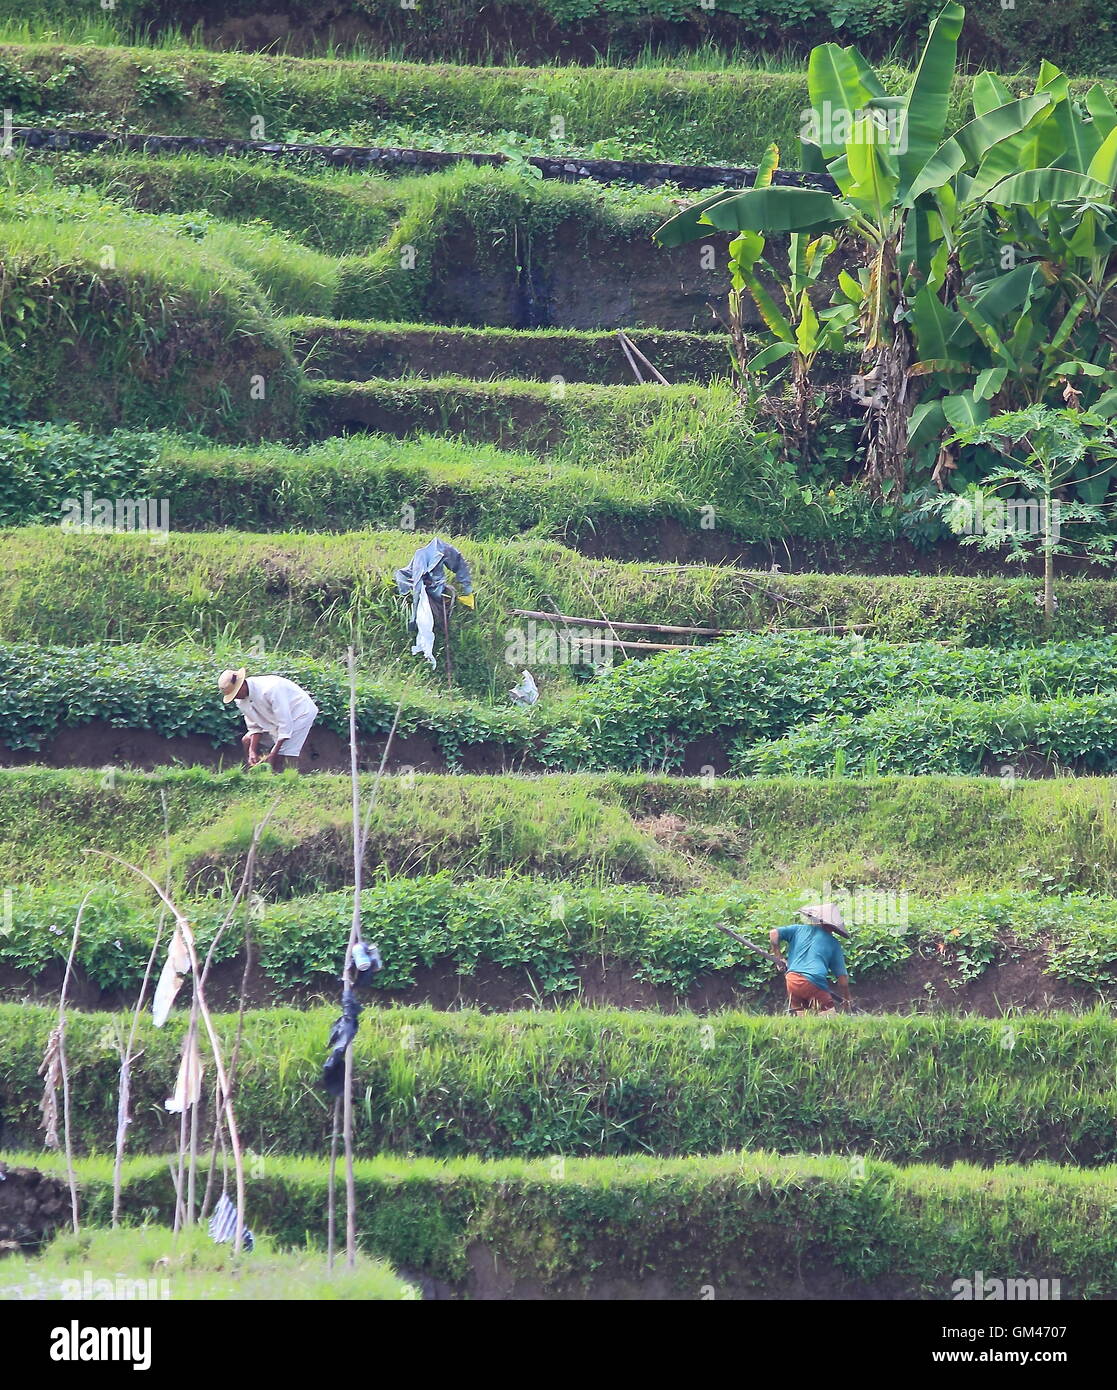 Country-Szene mit Bauern in Reisfelder in Ubud Bali Indonesien Stockfoto